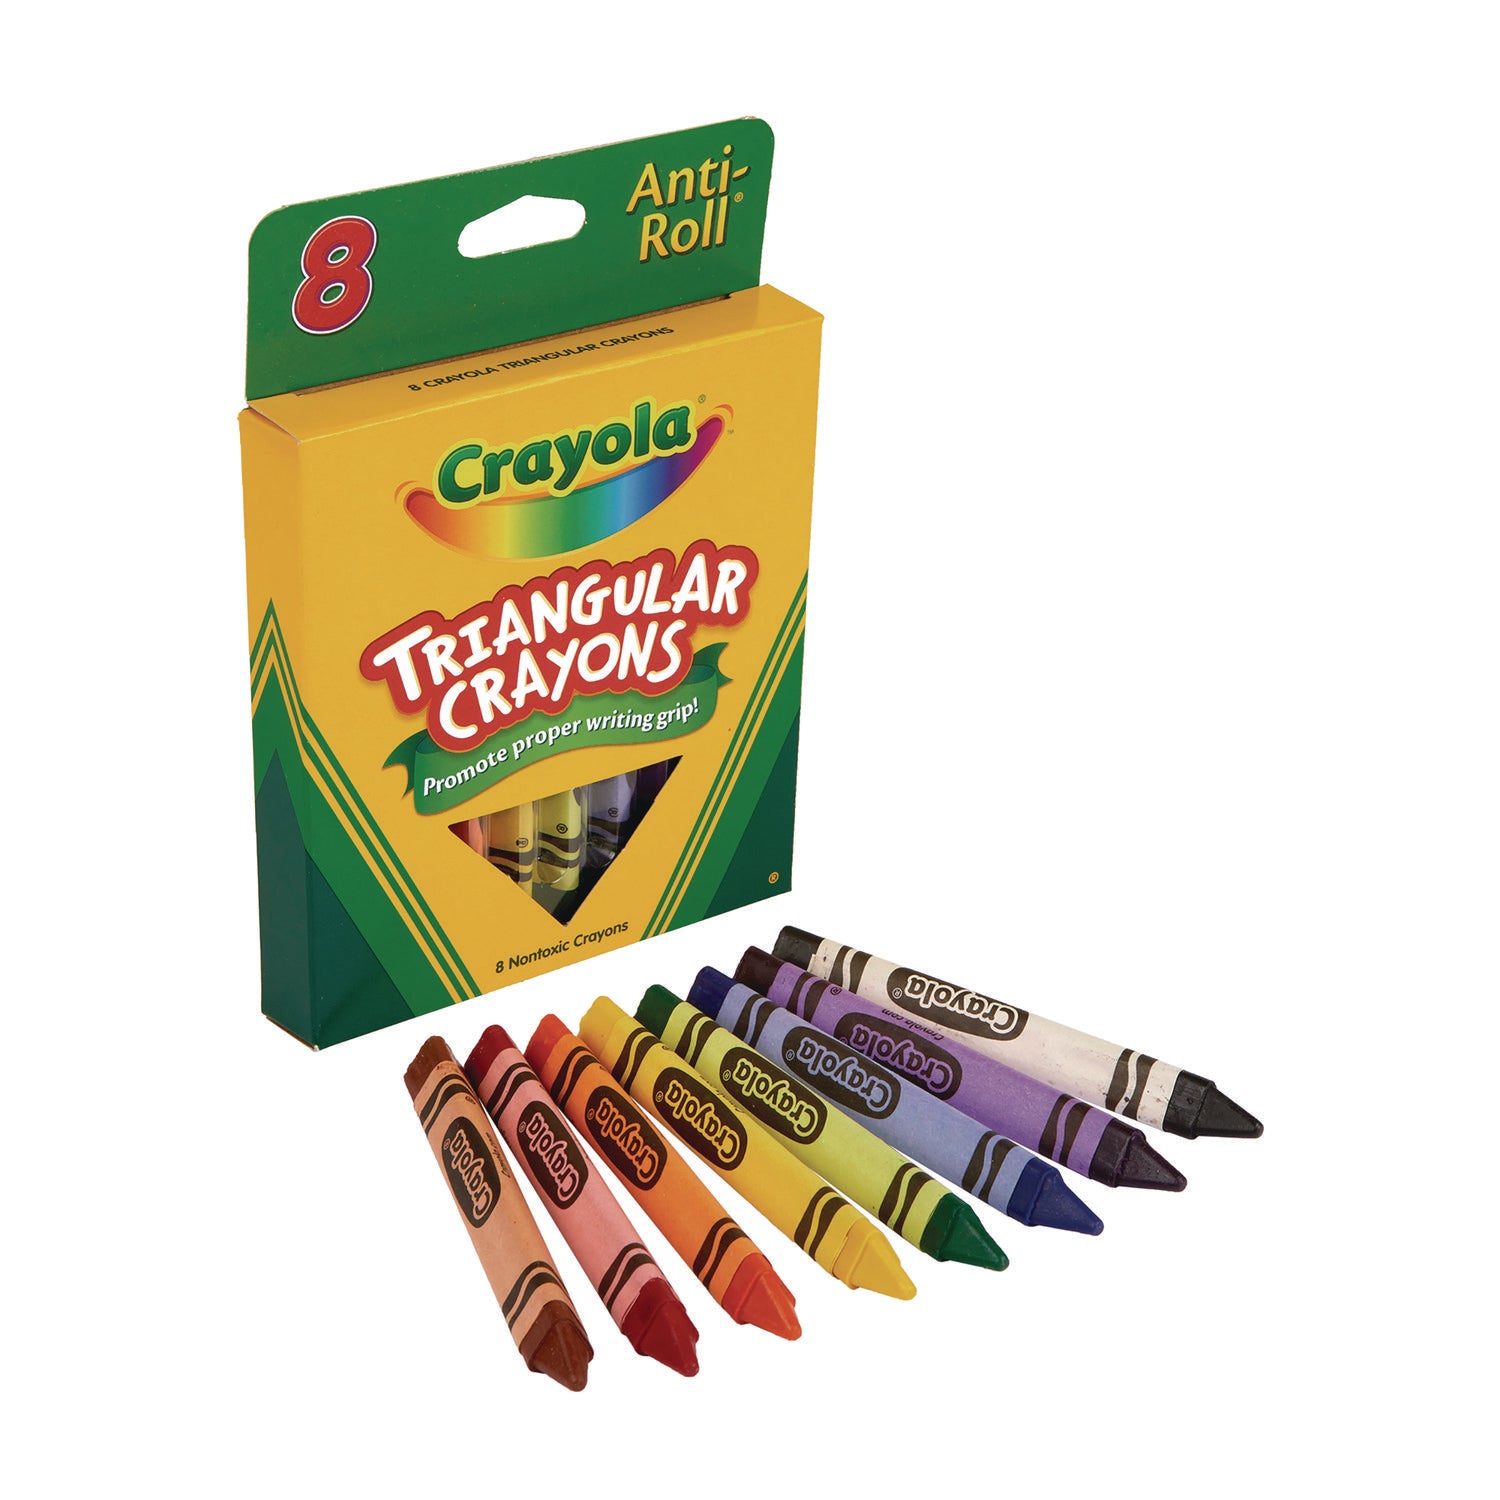 Triangular Crayons, 8 Colors/Box